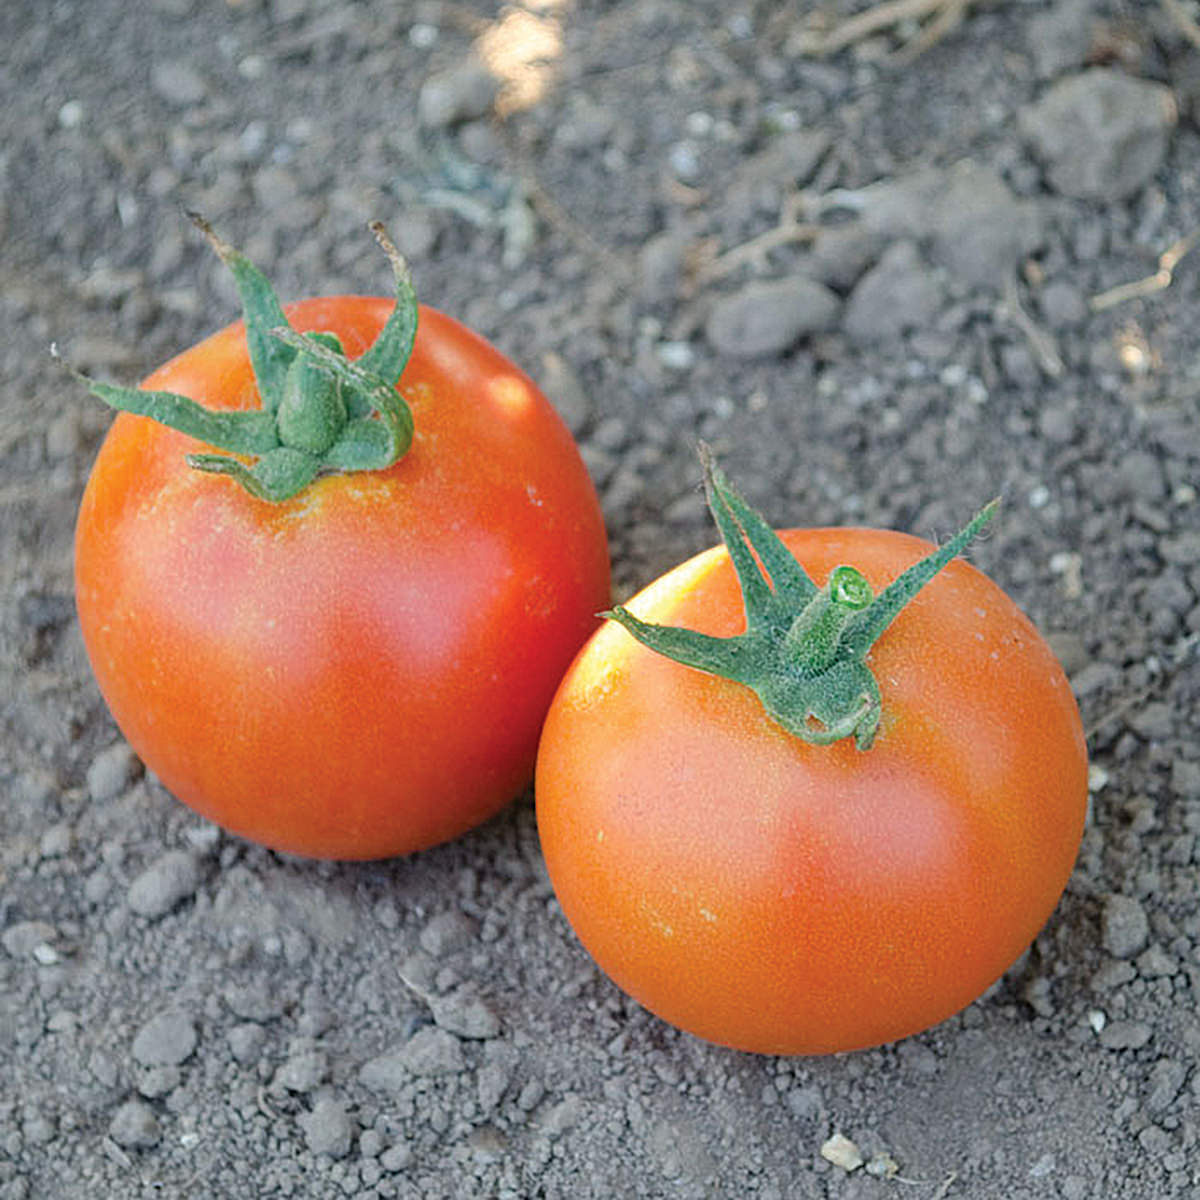 Pamella F1 Hybrid Tomato Seeds